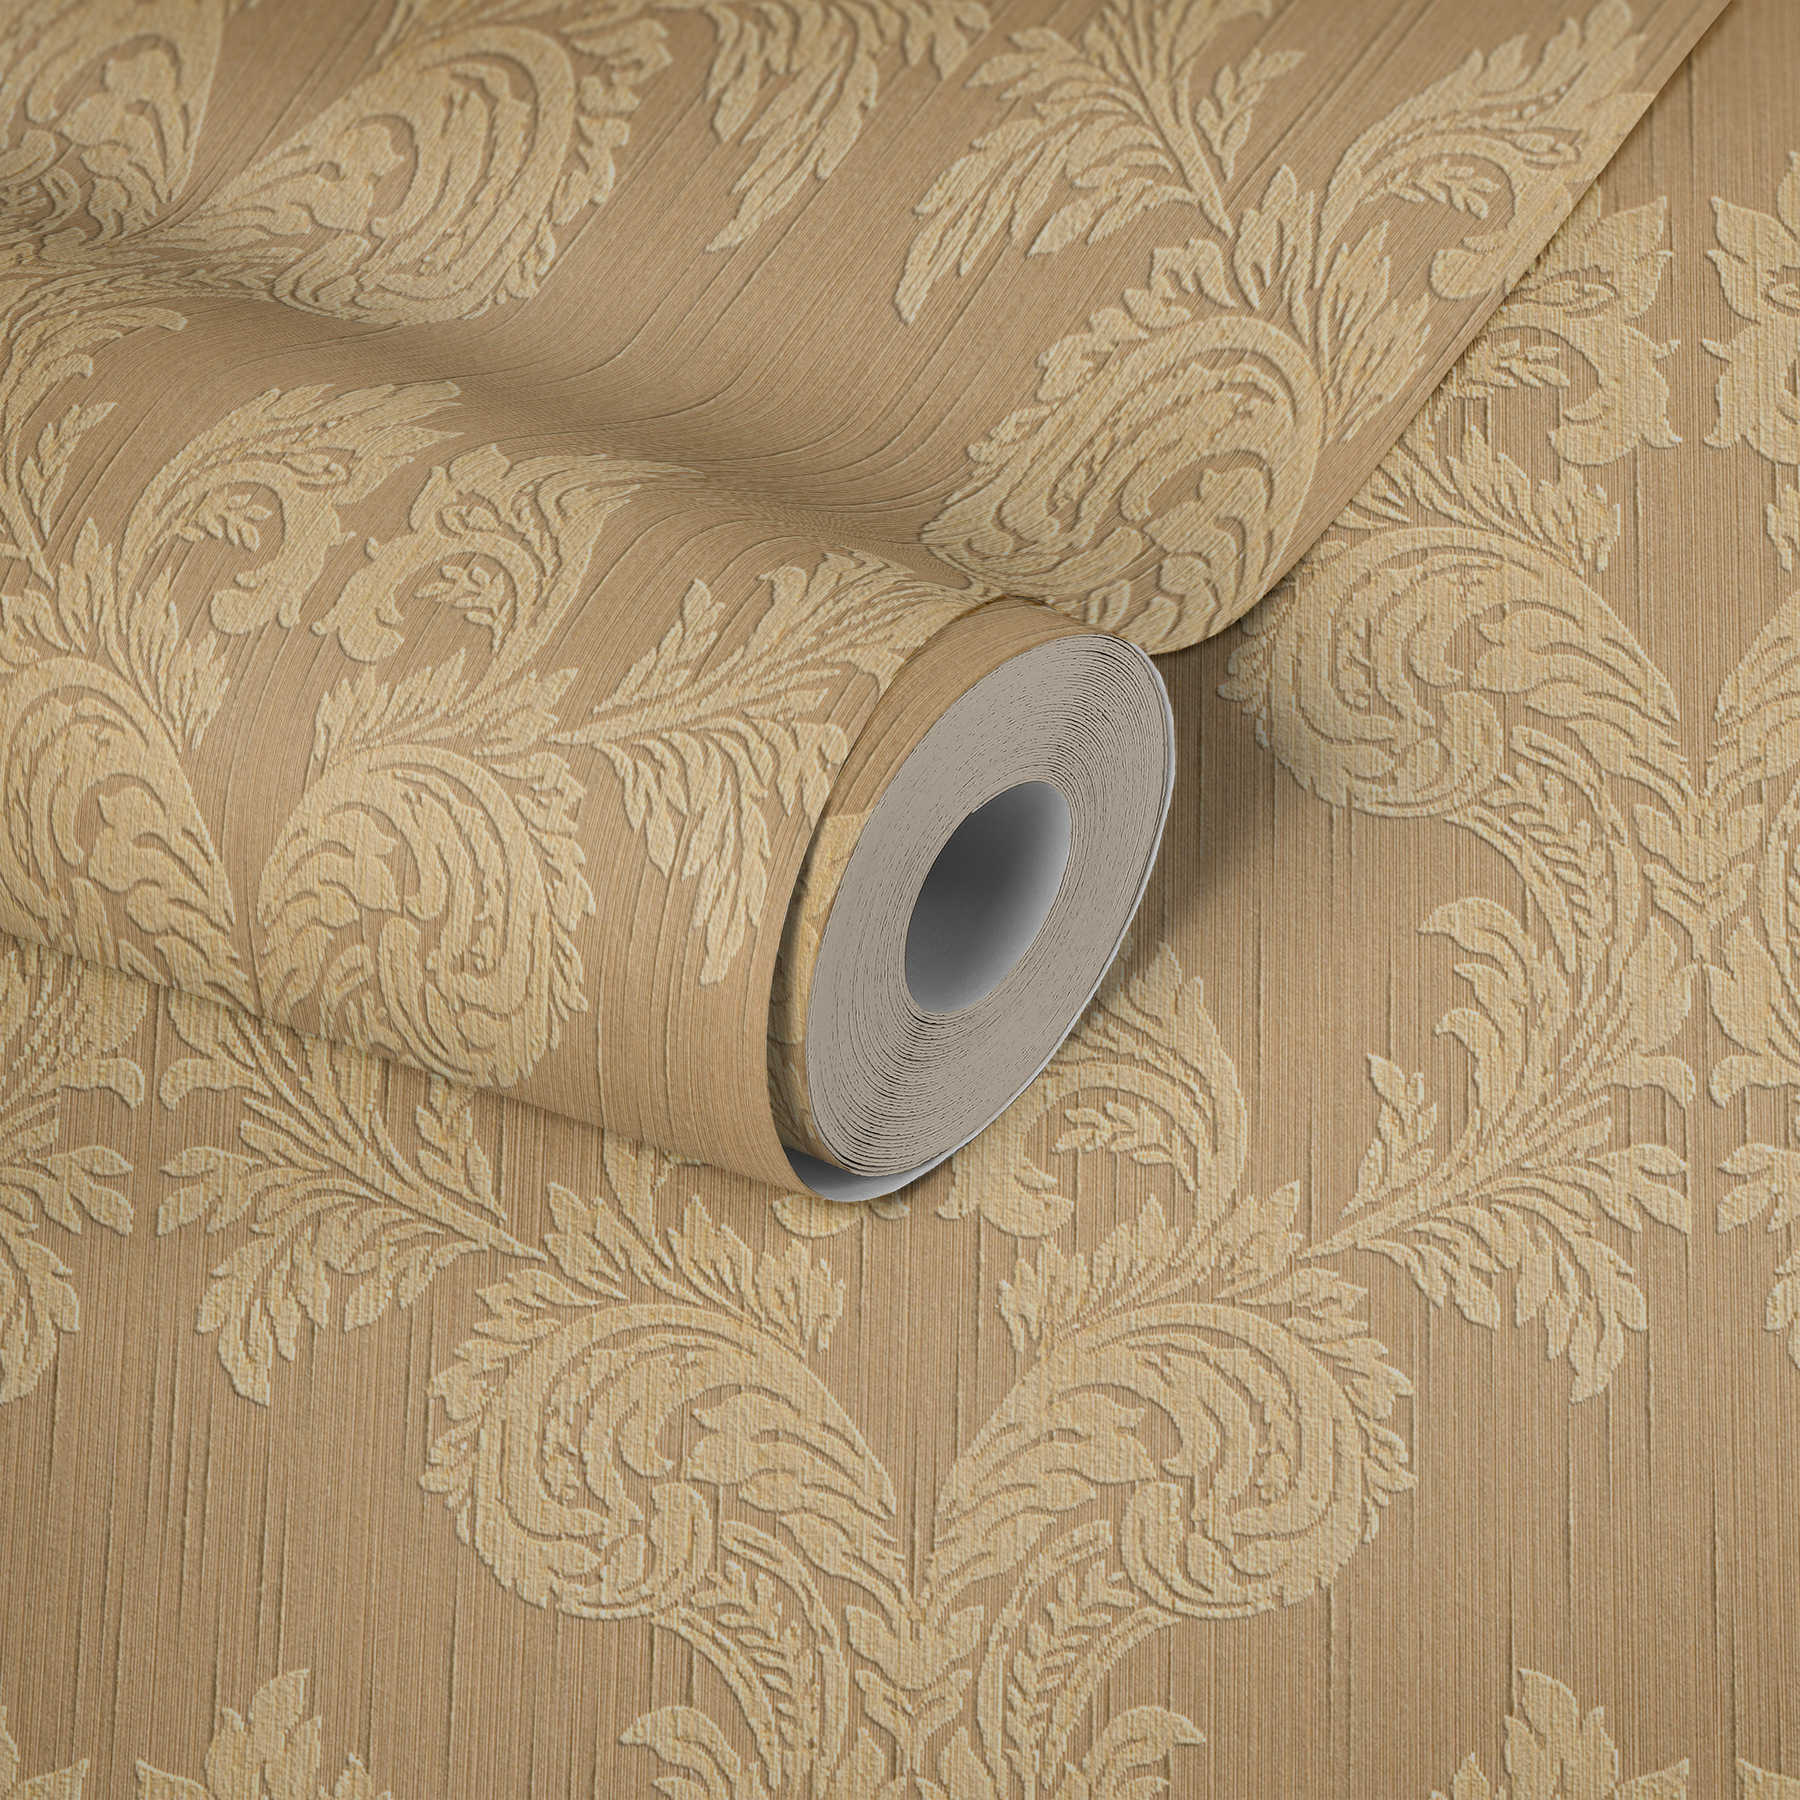             wallpaper textile texture & ornamental pattern in classic style - orange
        